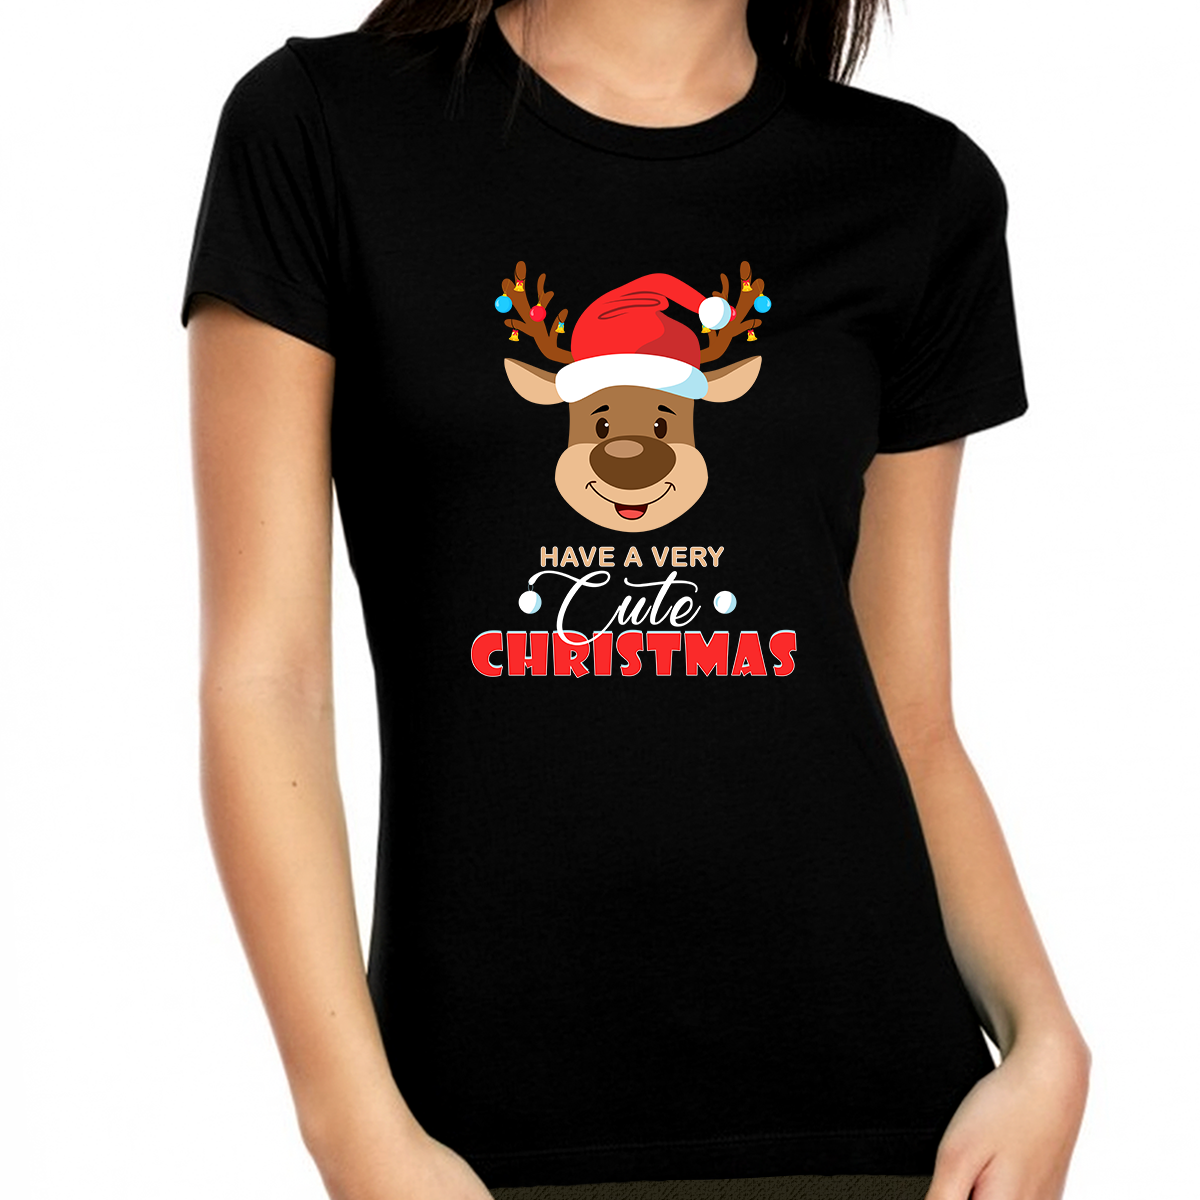 Cute Christmas Shirts for Women Cute Christmas Outfits for Women Cute Reindeer Christmas Shirt